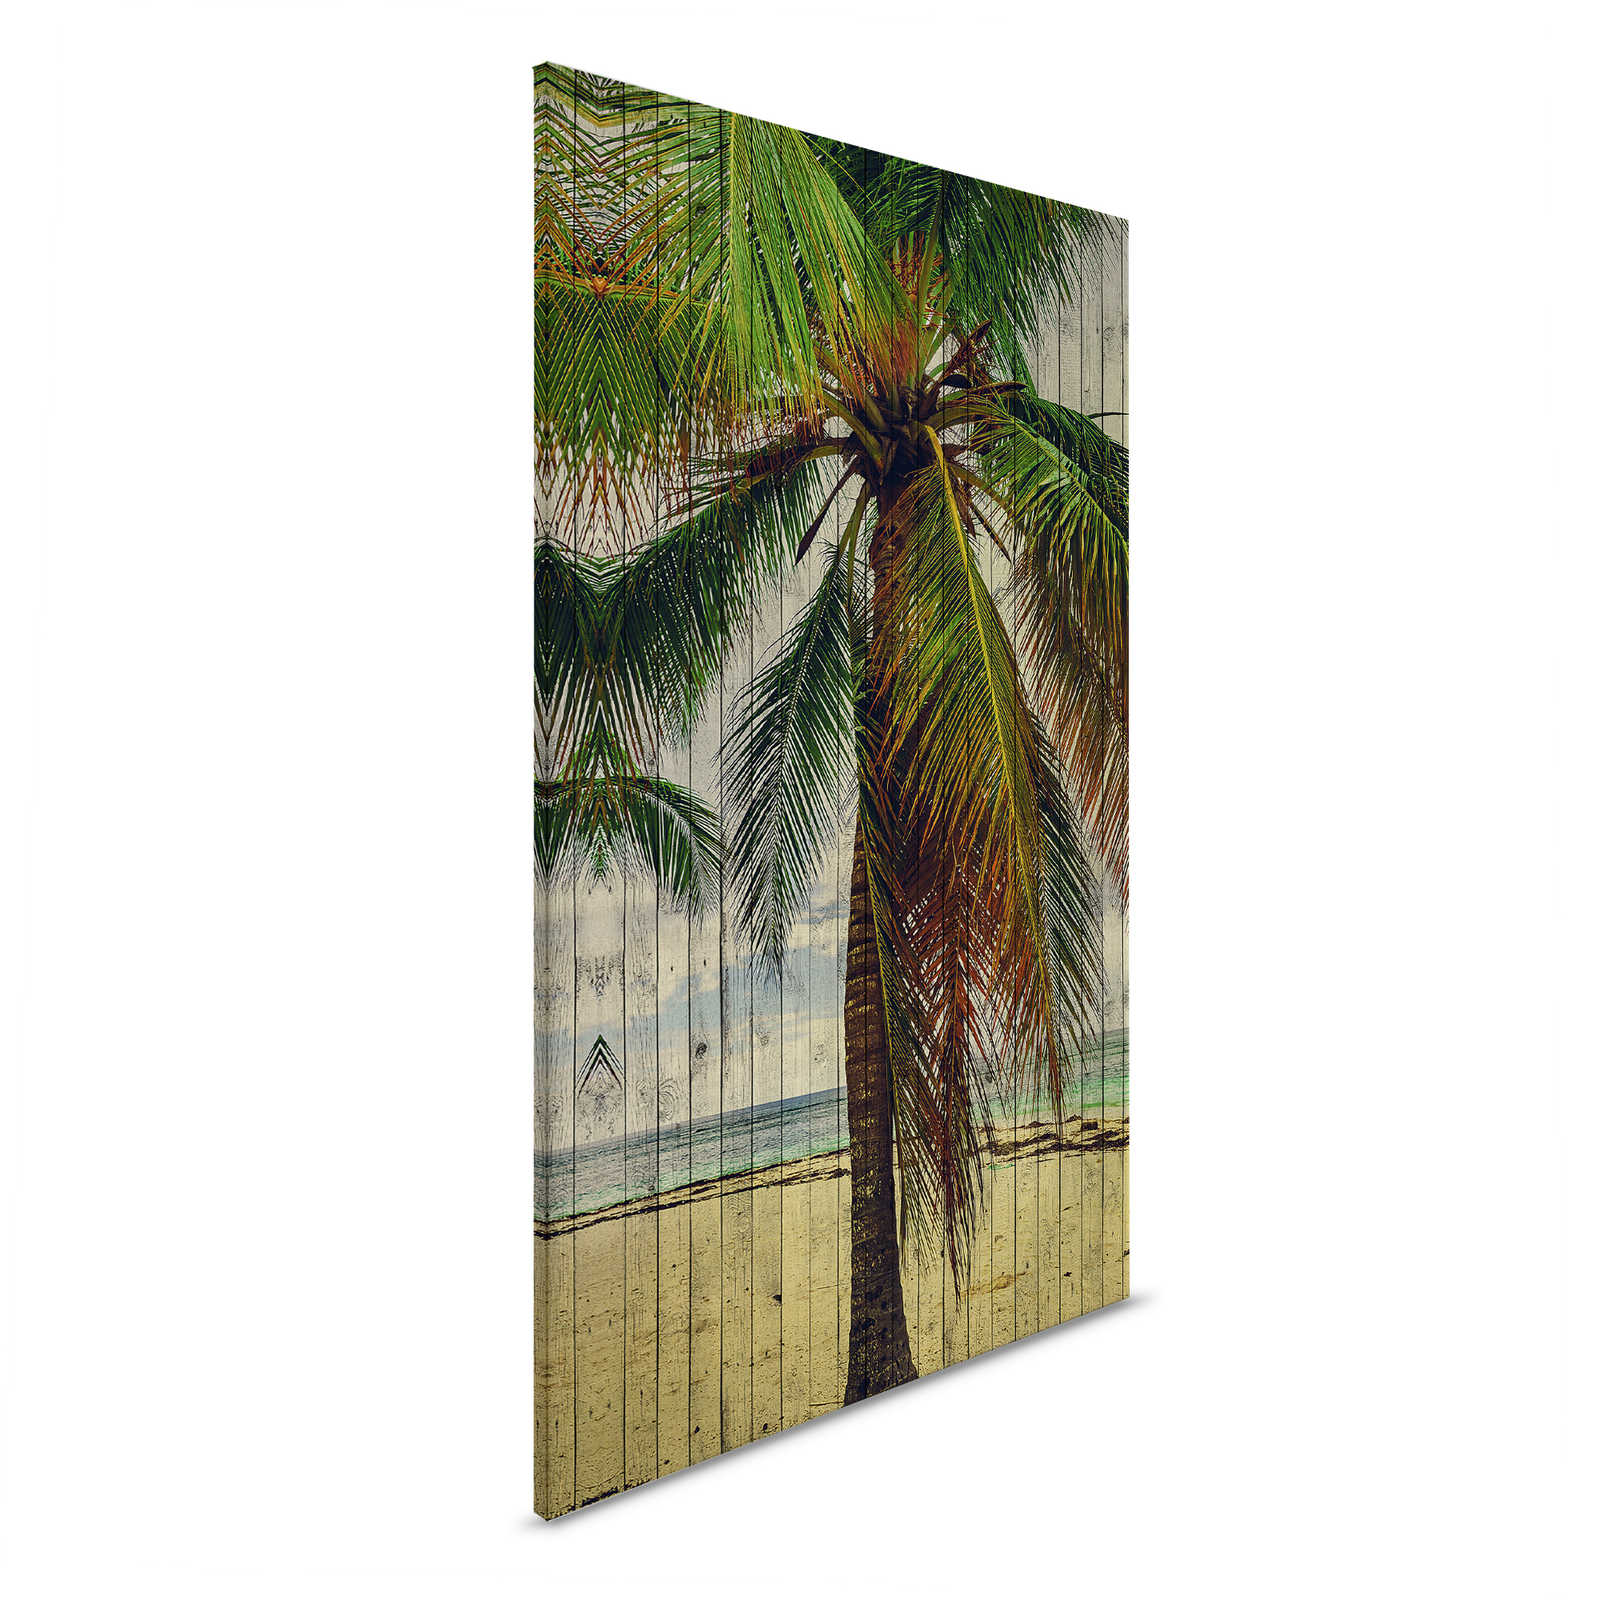         Tahiti 3 - Palmen Leinwandbild mit Urlaubsfeeling - Holzpaneele Struktur – 0,60 m x 0,90 m
    